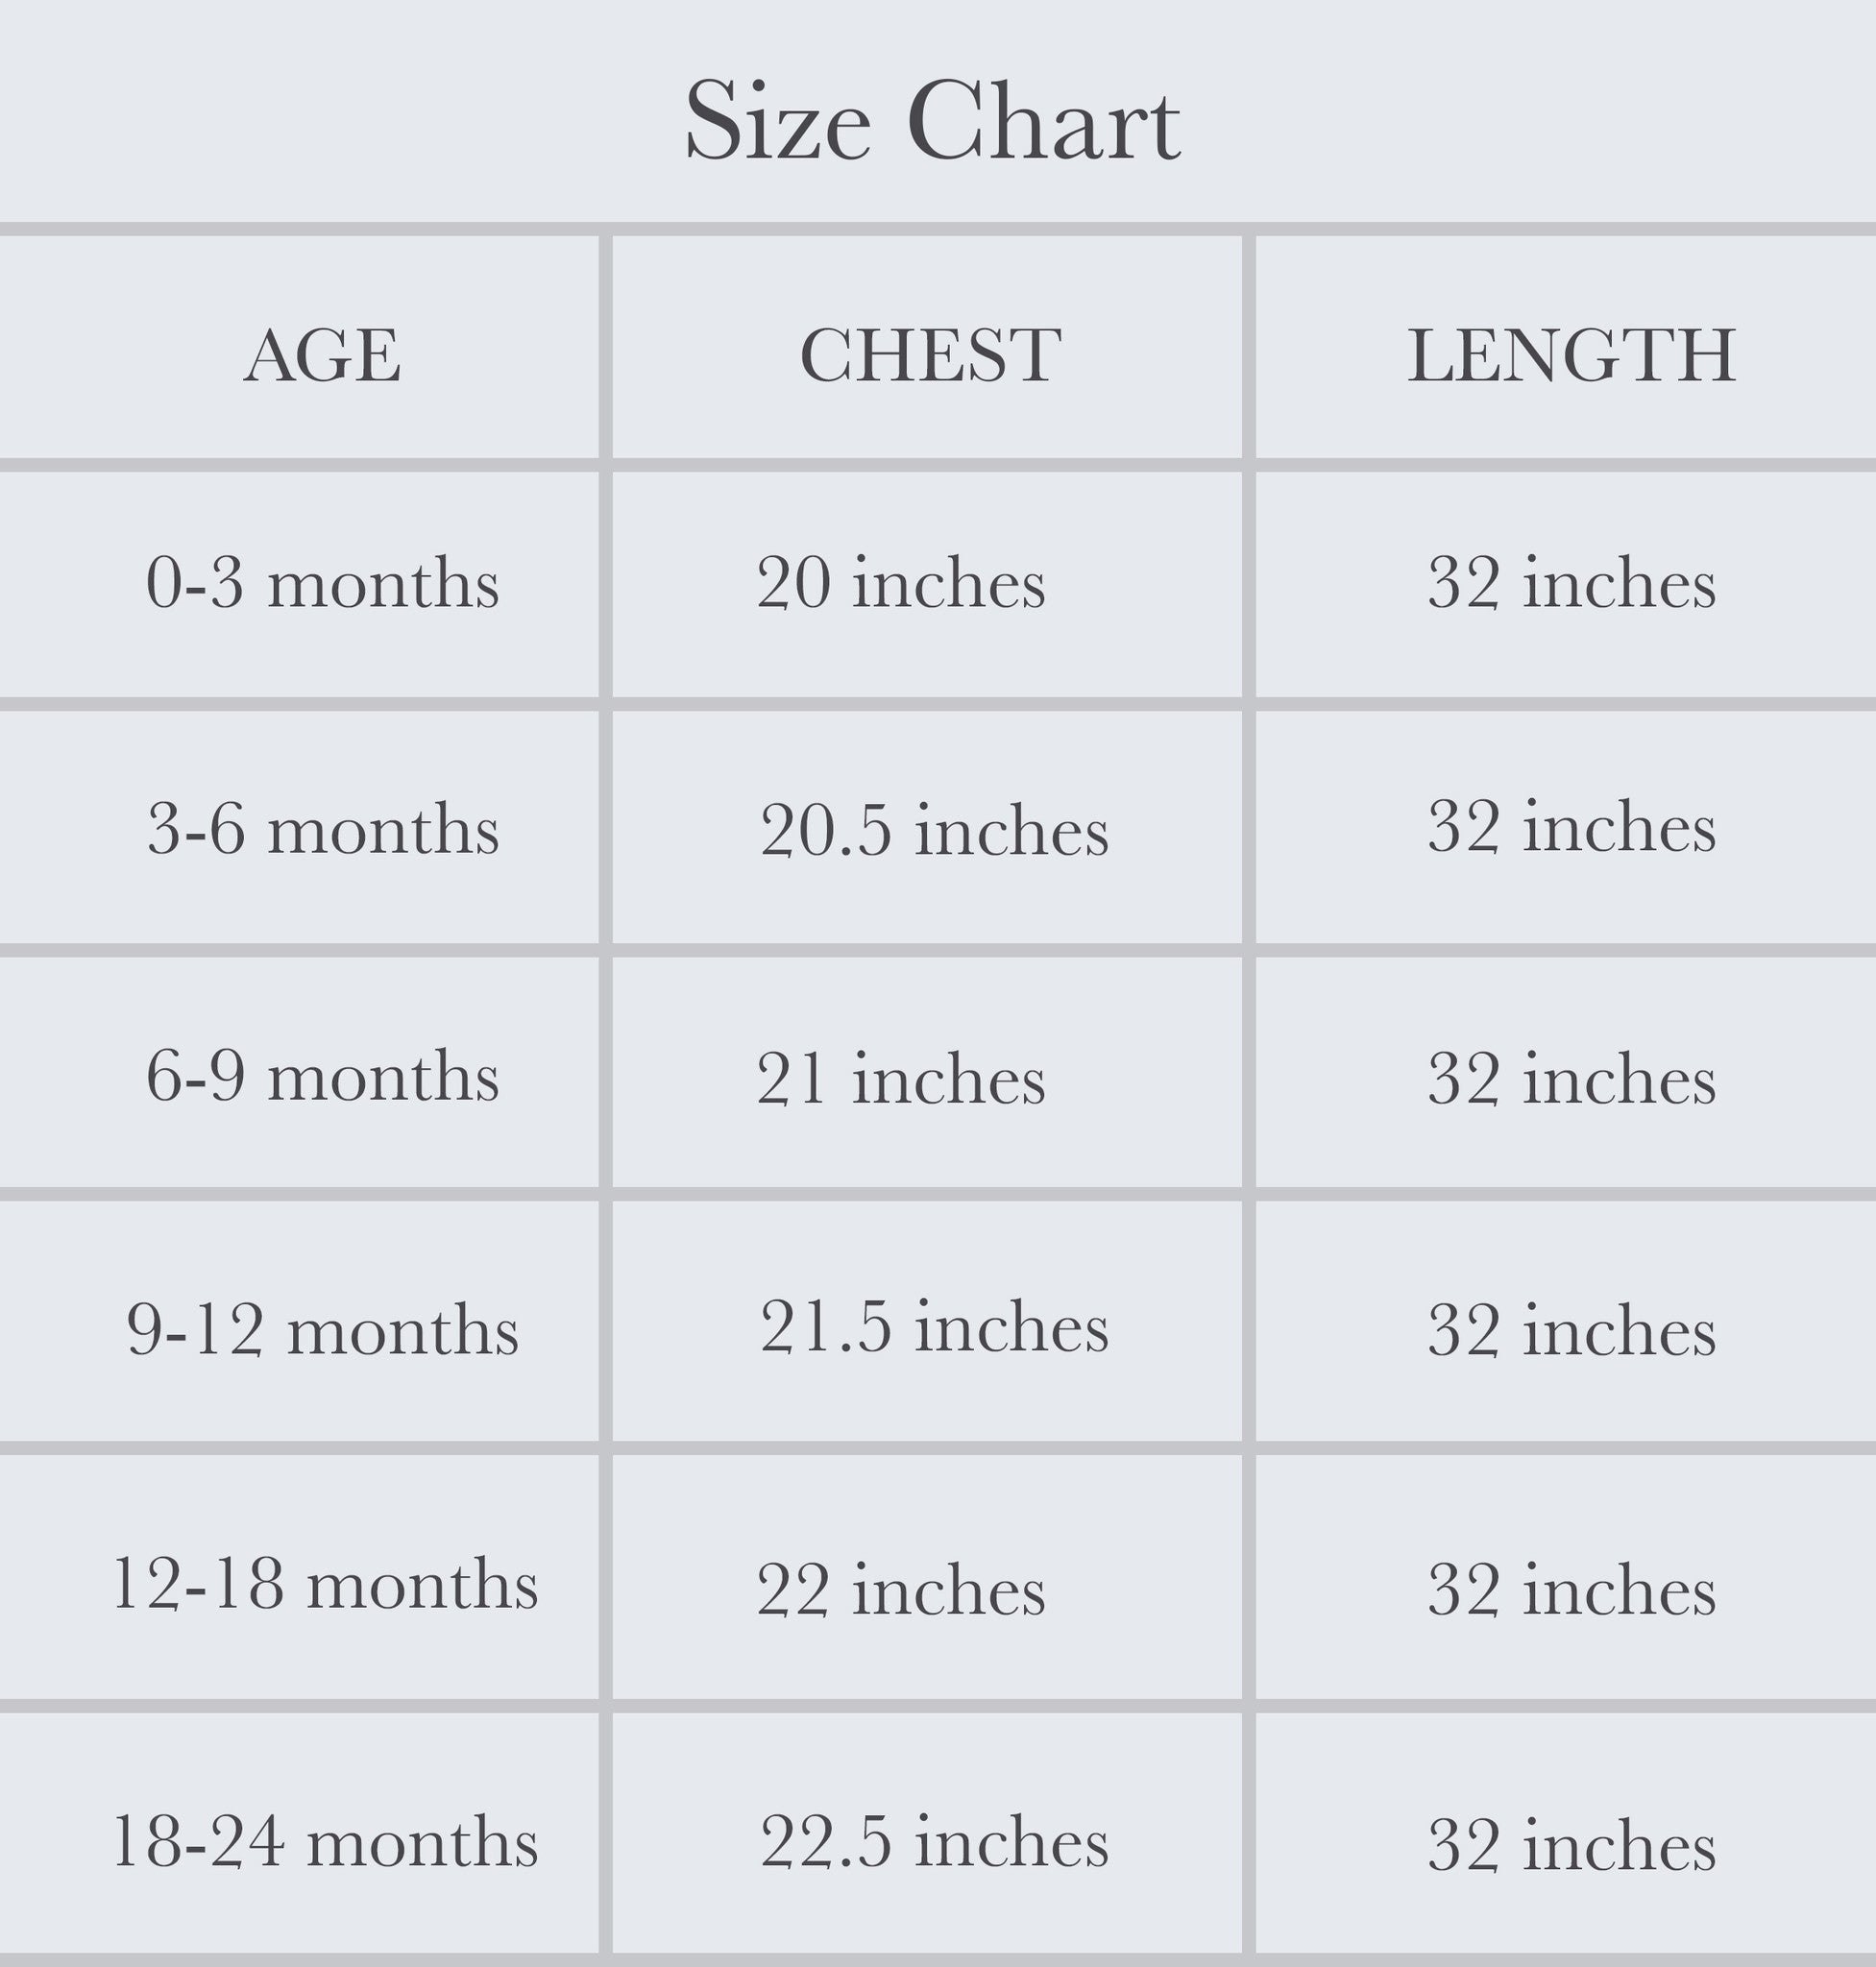 0 3 Months Size Chart